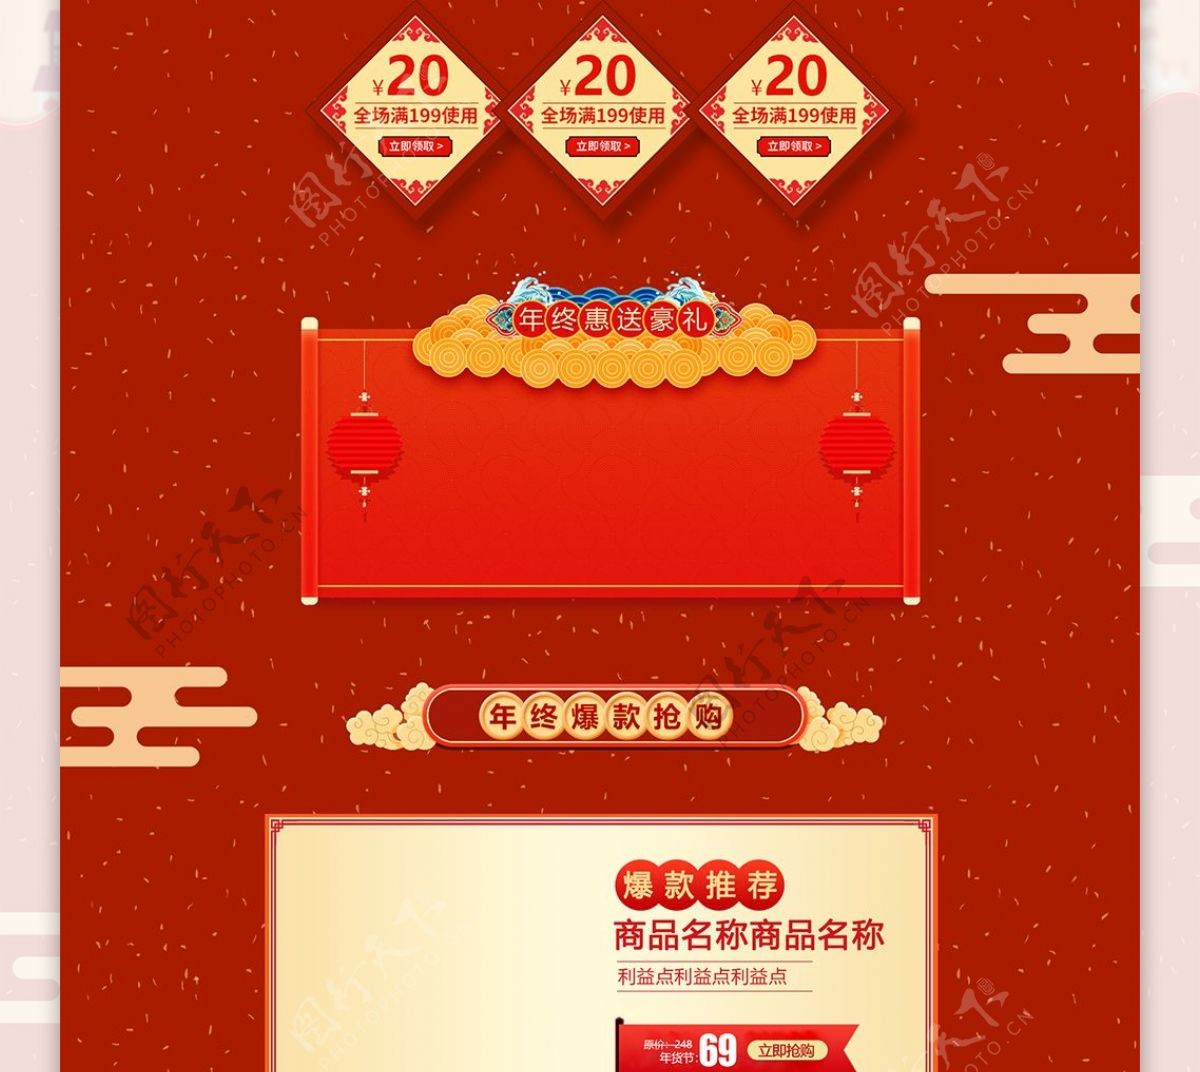 C4D红色喜庆中国风年终盛典促销活动模板